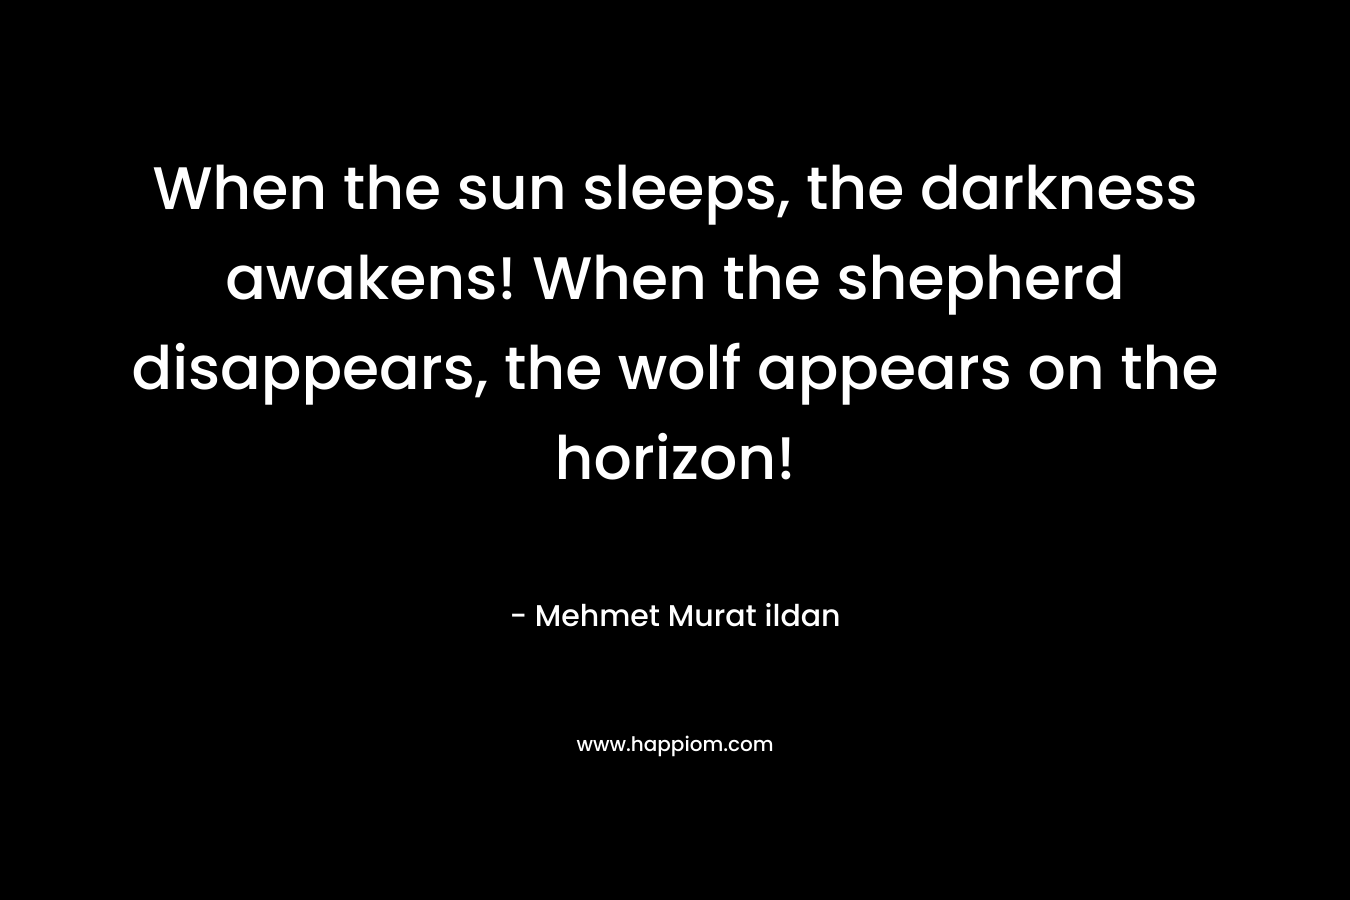 When the sun sleeps, the darkness awakens! When the shepherd disappears, the wolf appears on the horizon! – Mehmet Murat ildan